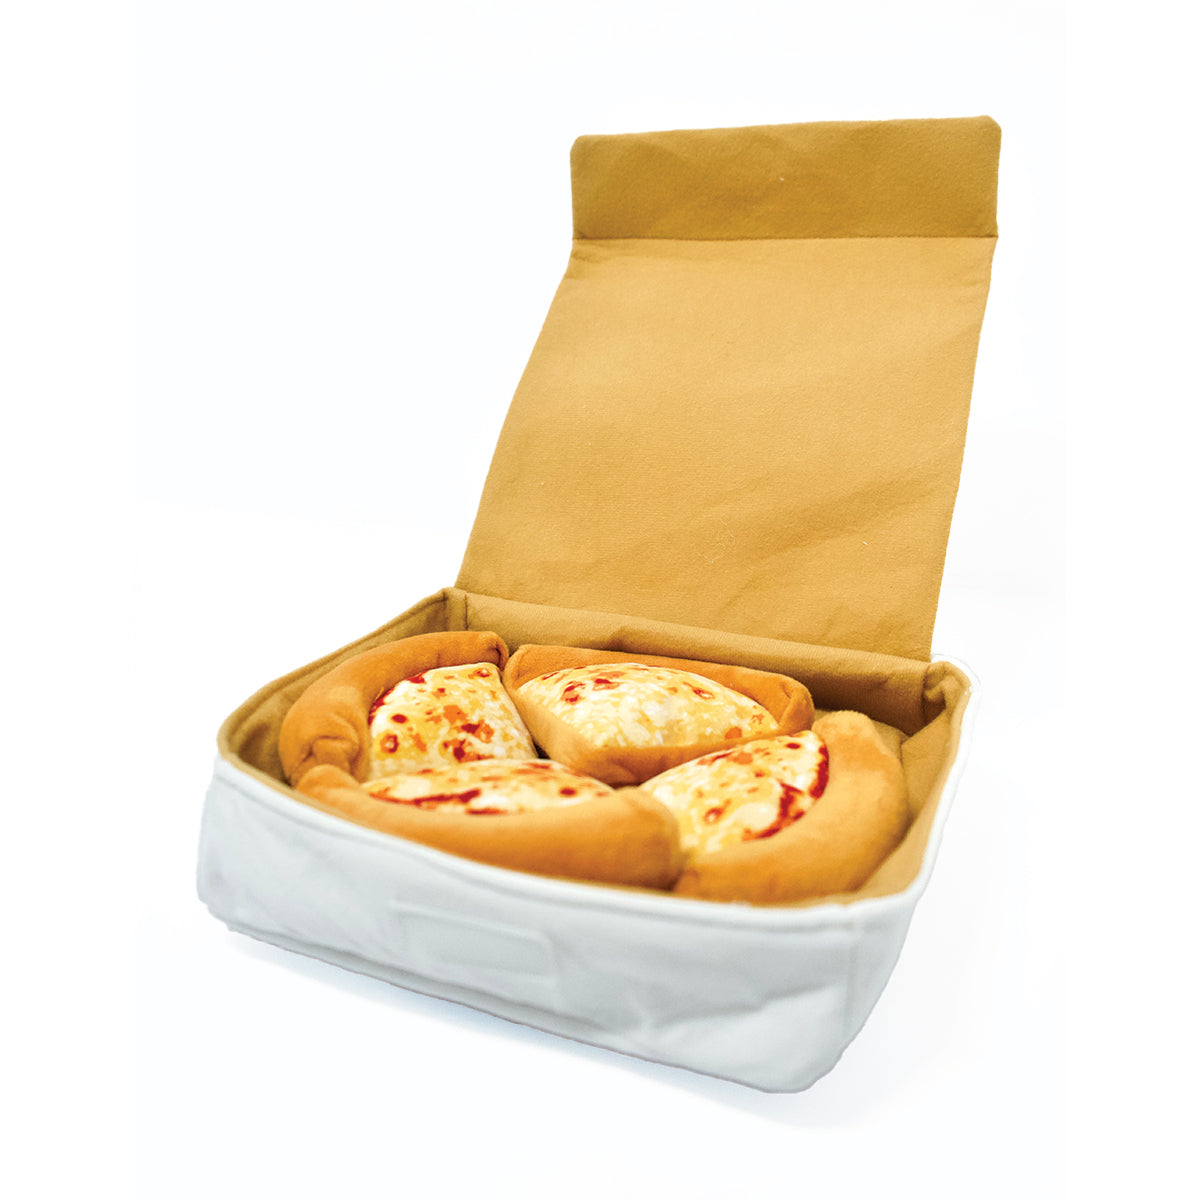 One Bite Kids Plush Pizza Box 4 Slice-Kids Accessories-One Bite-One Size-Red-Barstool Sports